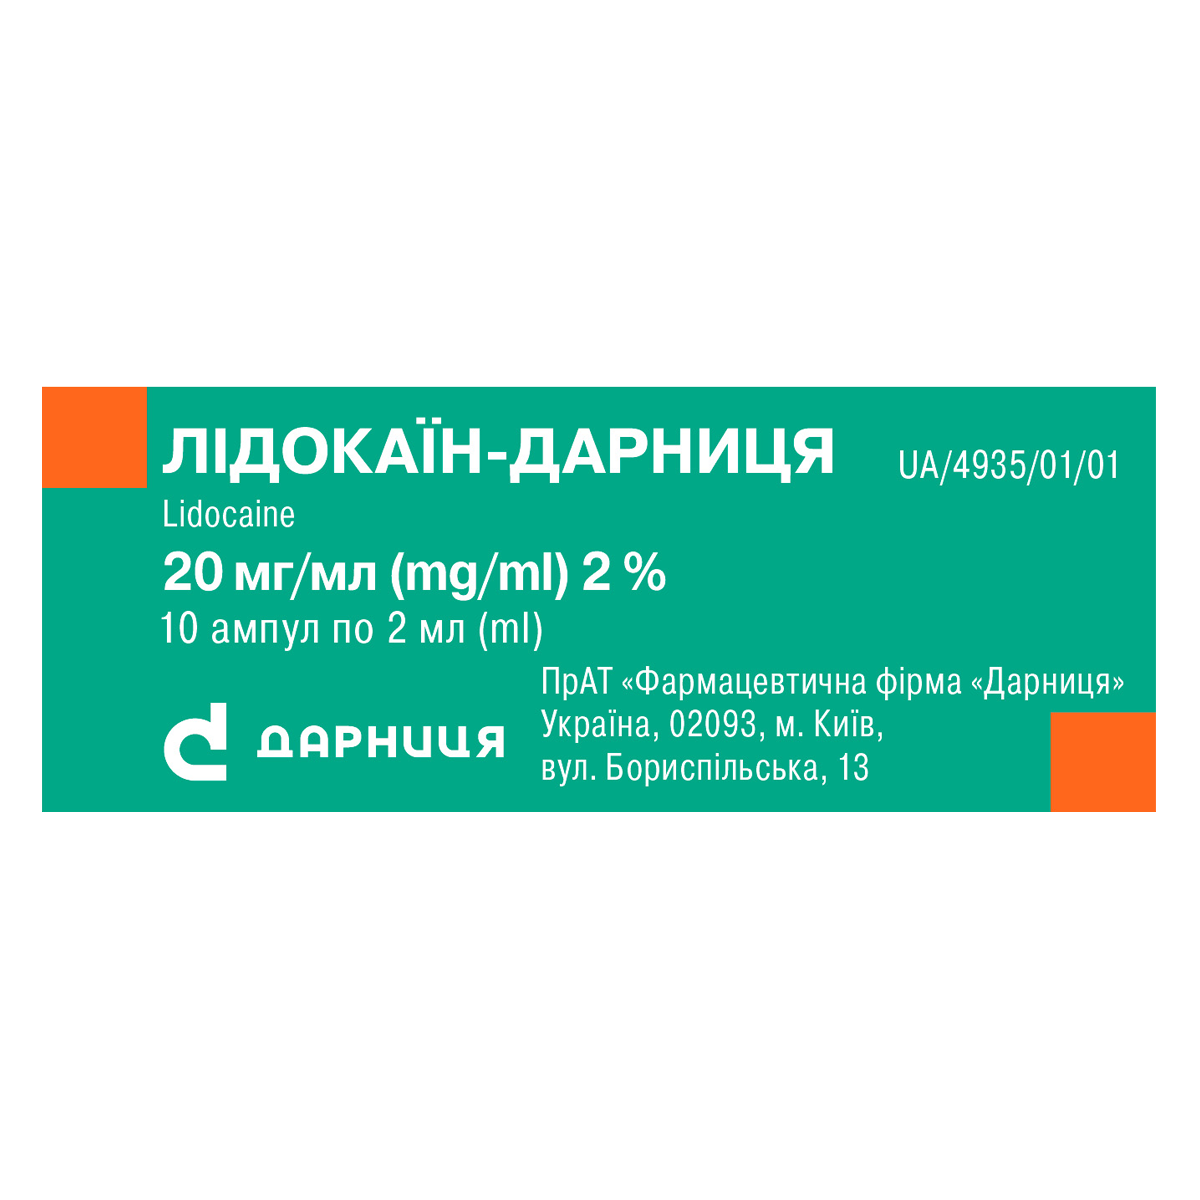 Lidocaine-Darnitsa «Darnytsia» pharmaceutical company